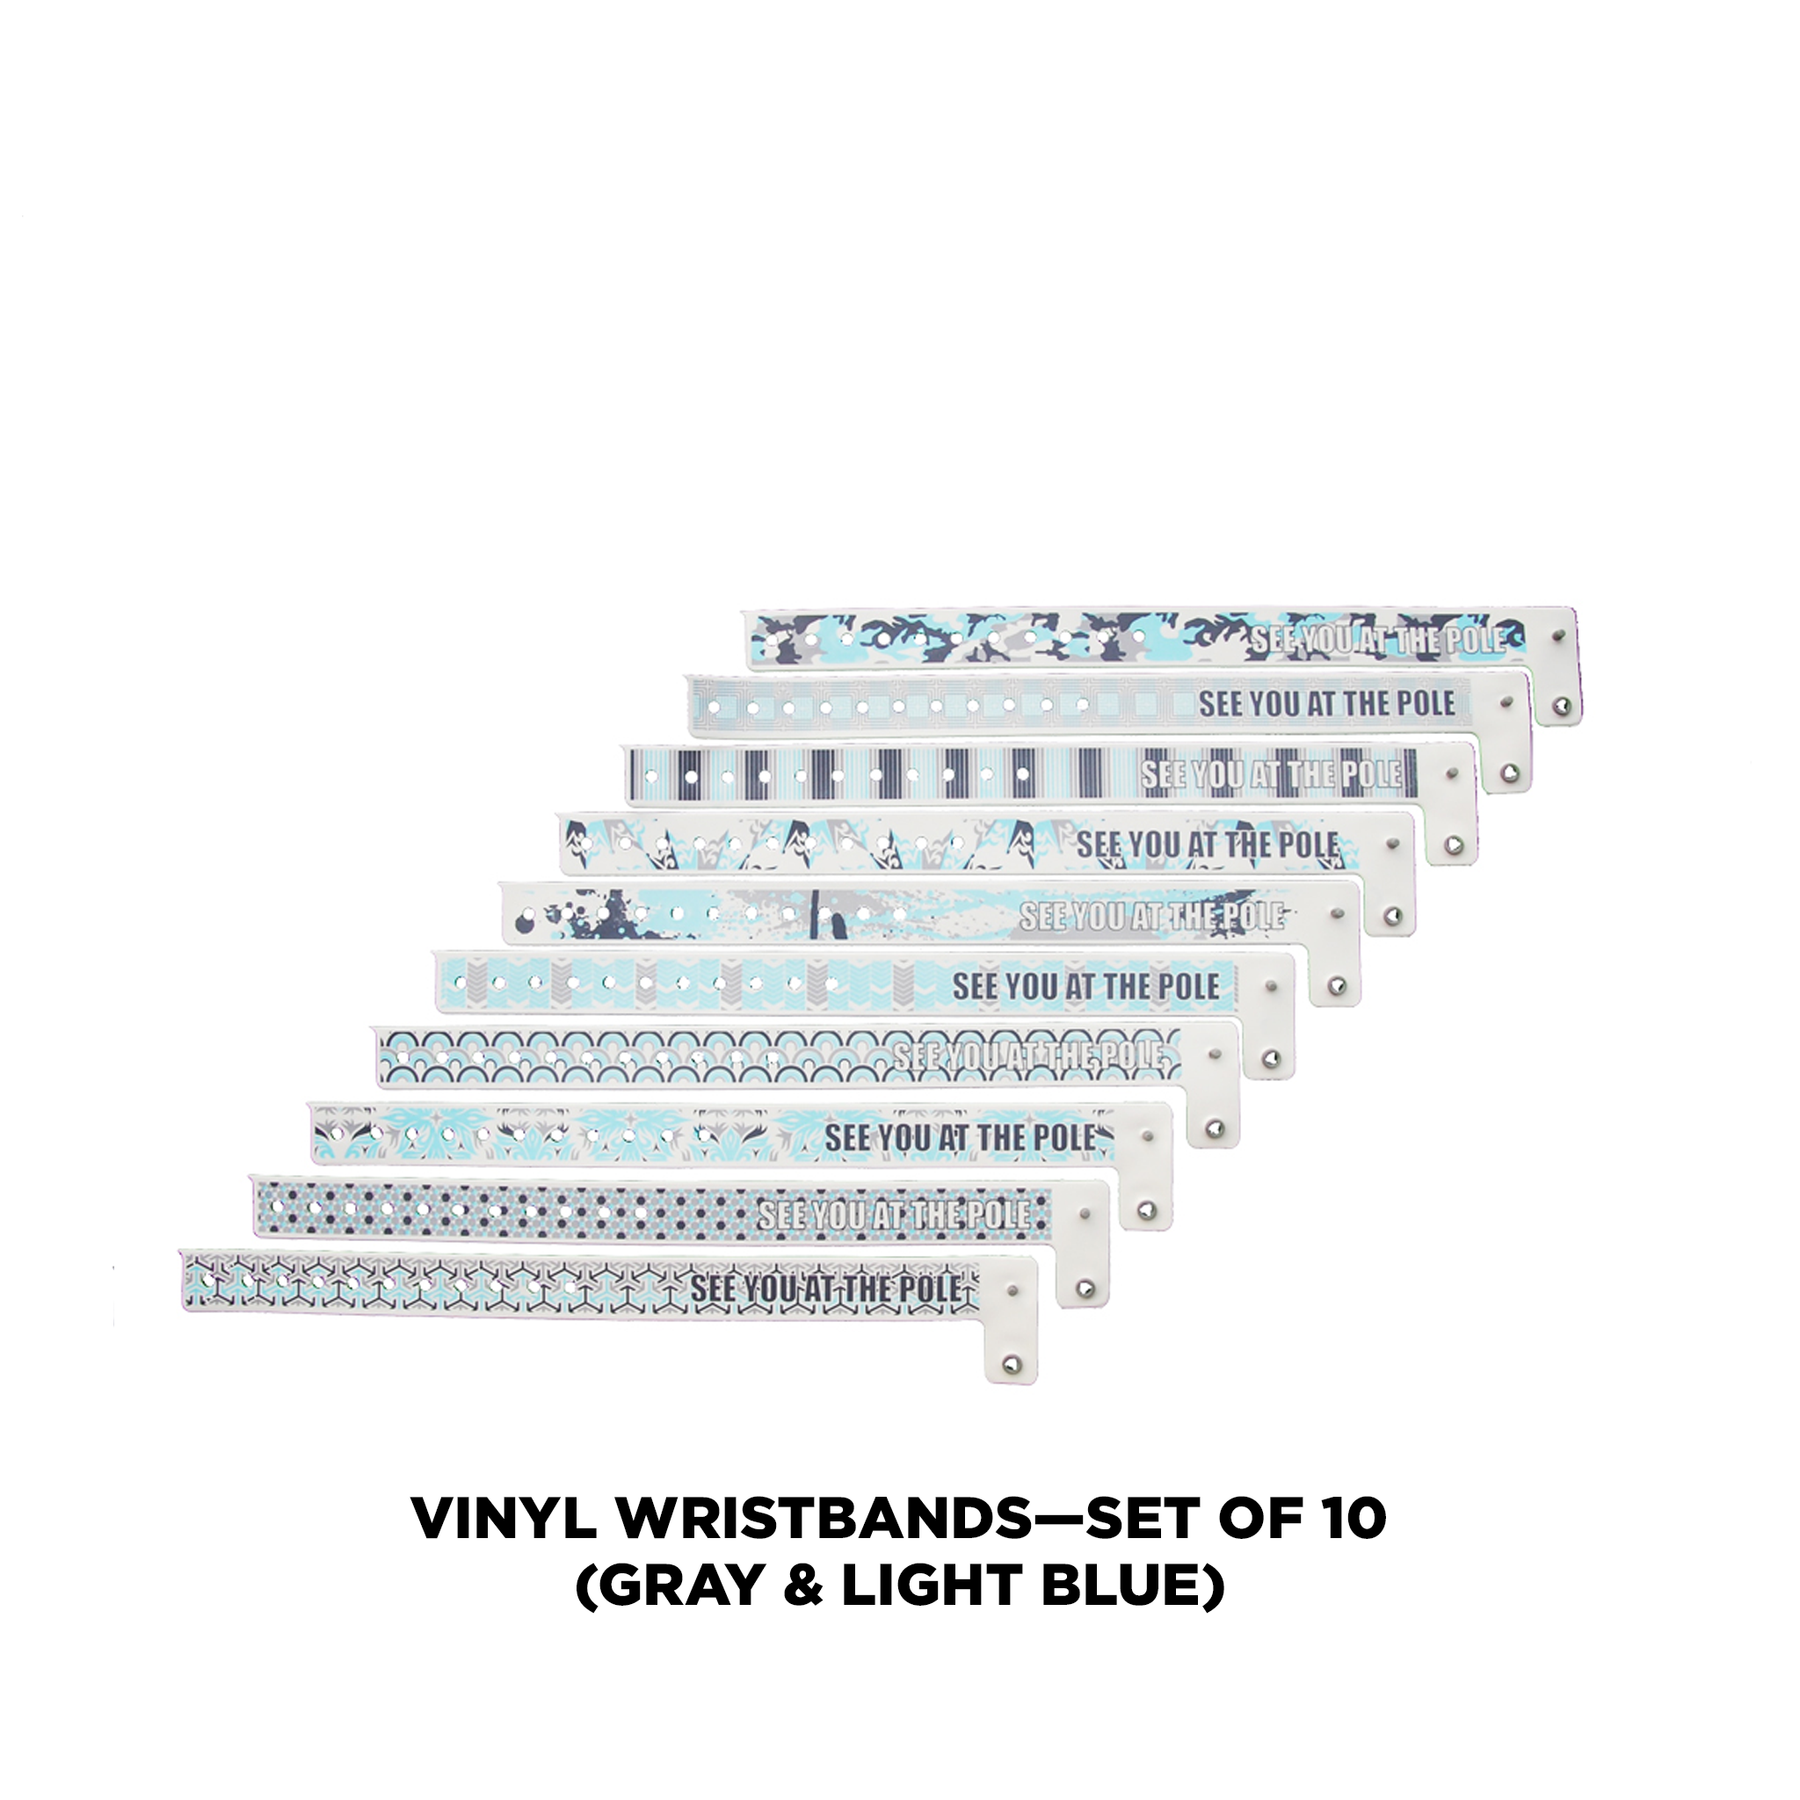 Vinyl Wristband (set of 10)—Light Blue and Gray